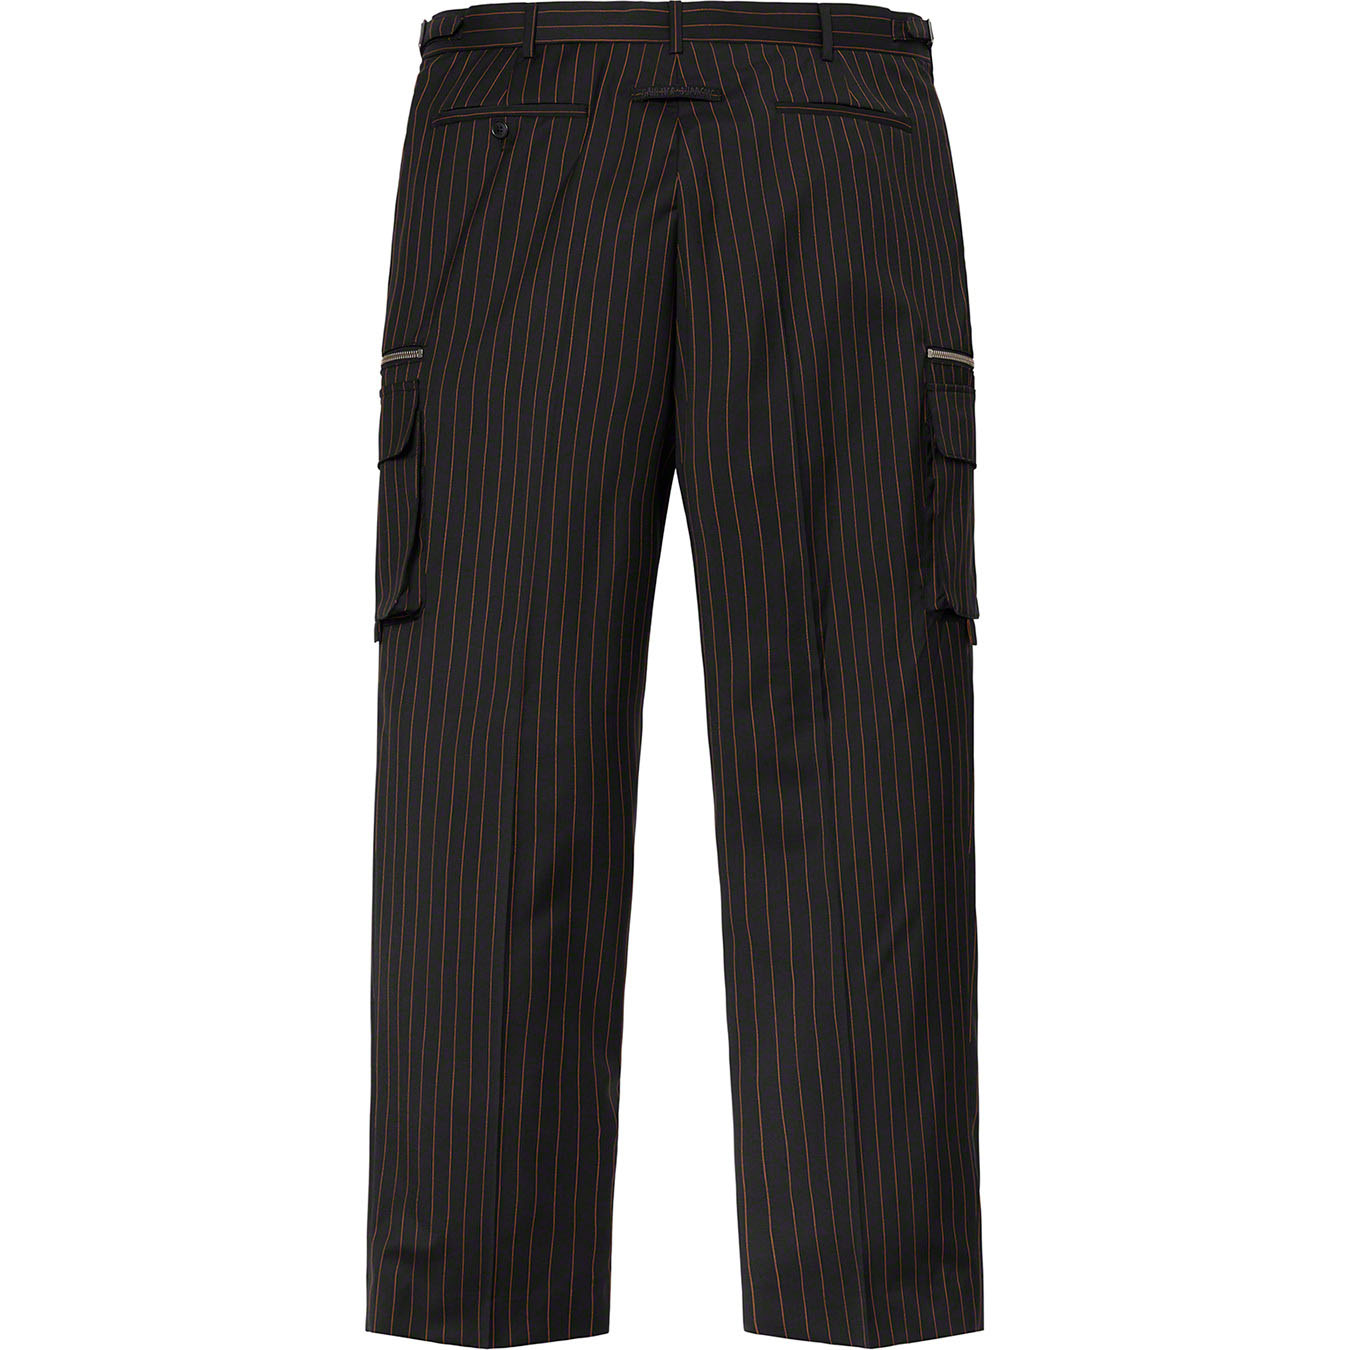 Supreme®/Jean Paul Gaultier® Pinstripe Cargo Suit Pant